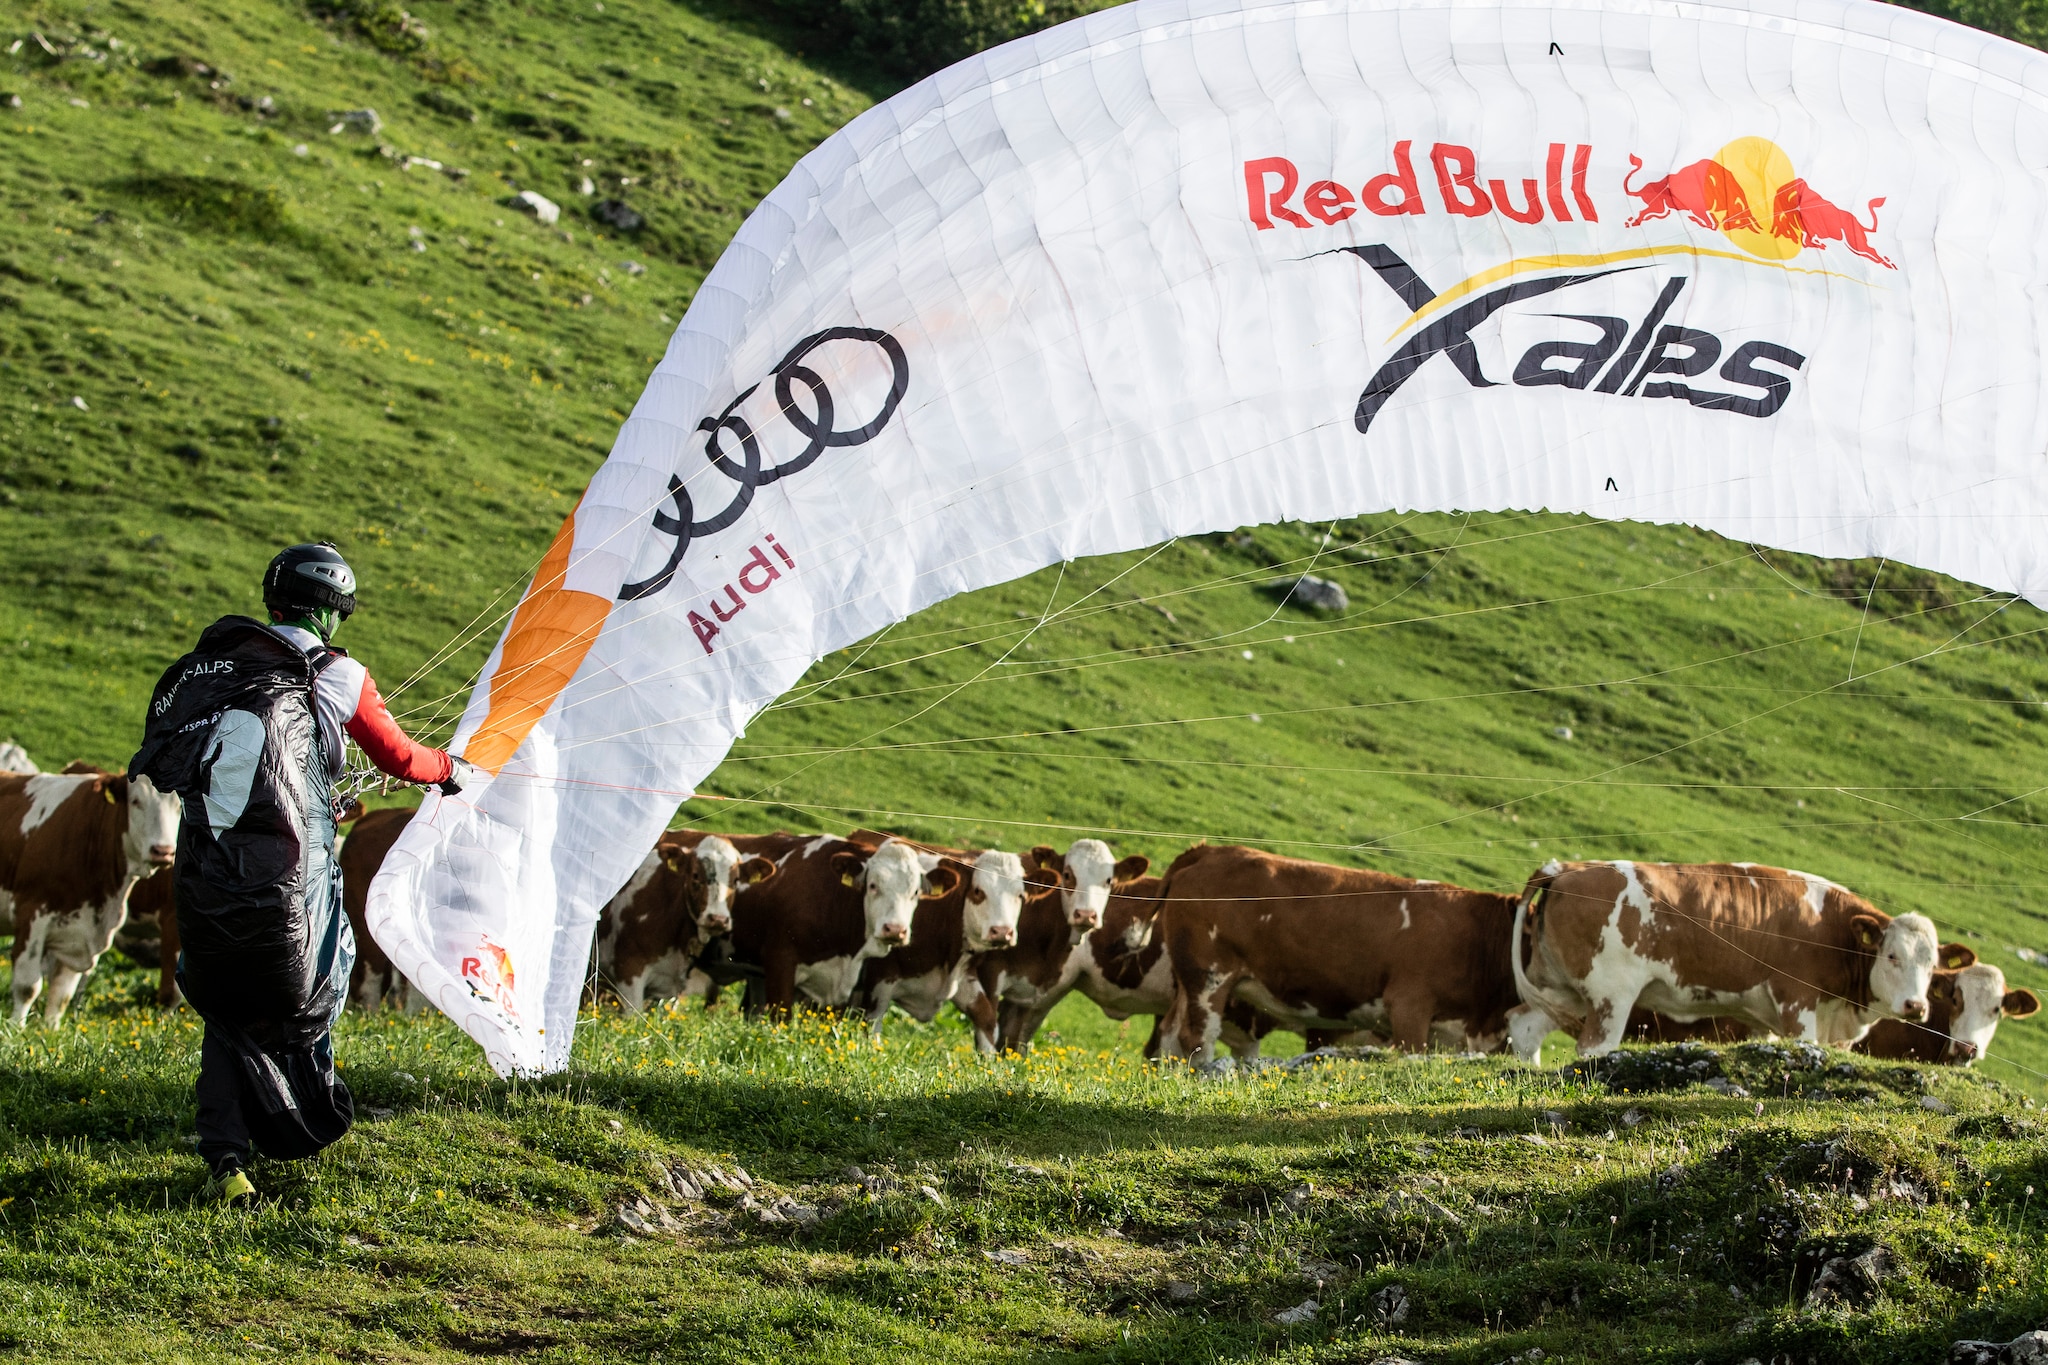 Tobias Grossrubatscher (ITA2) launches during the Red Bull X-Alps in Aschau im Chiemgau, Germany on June 17, 2019